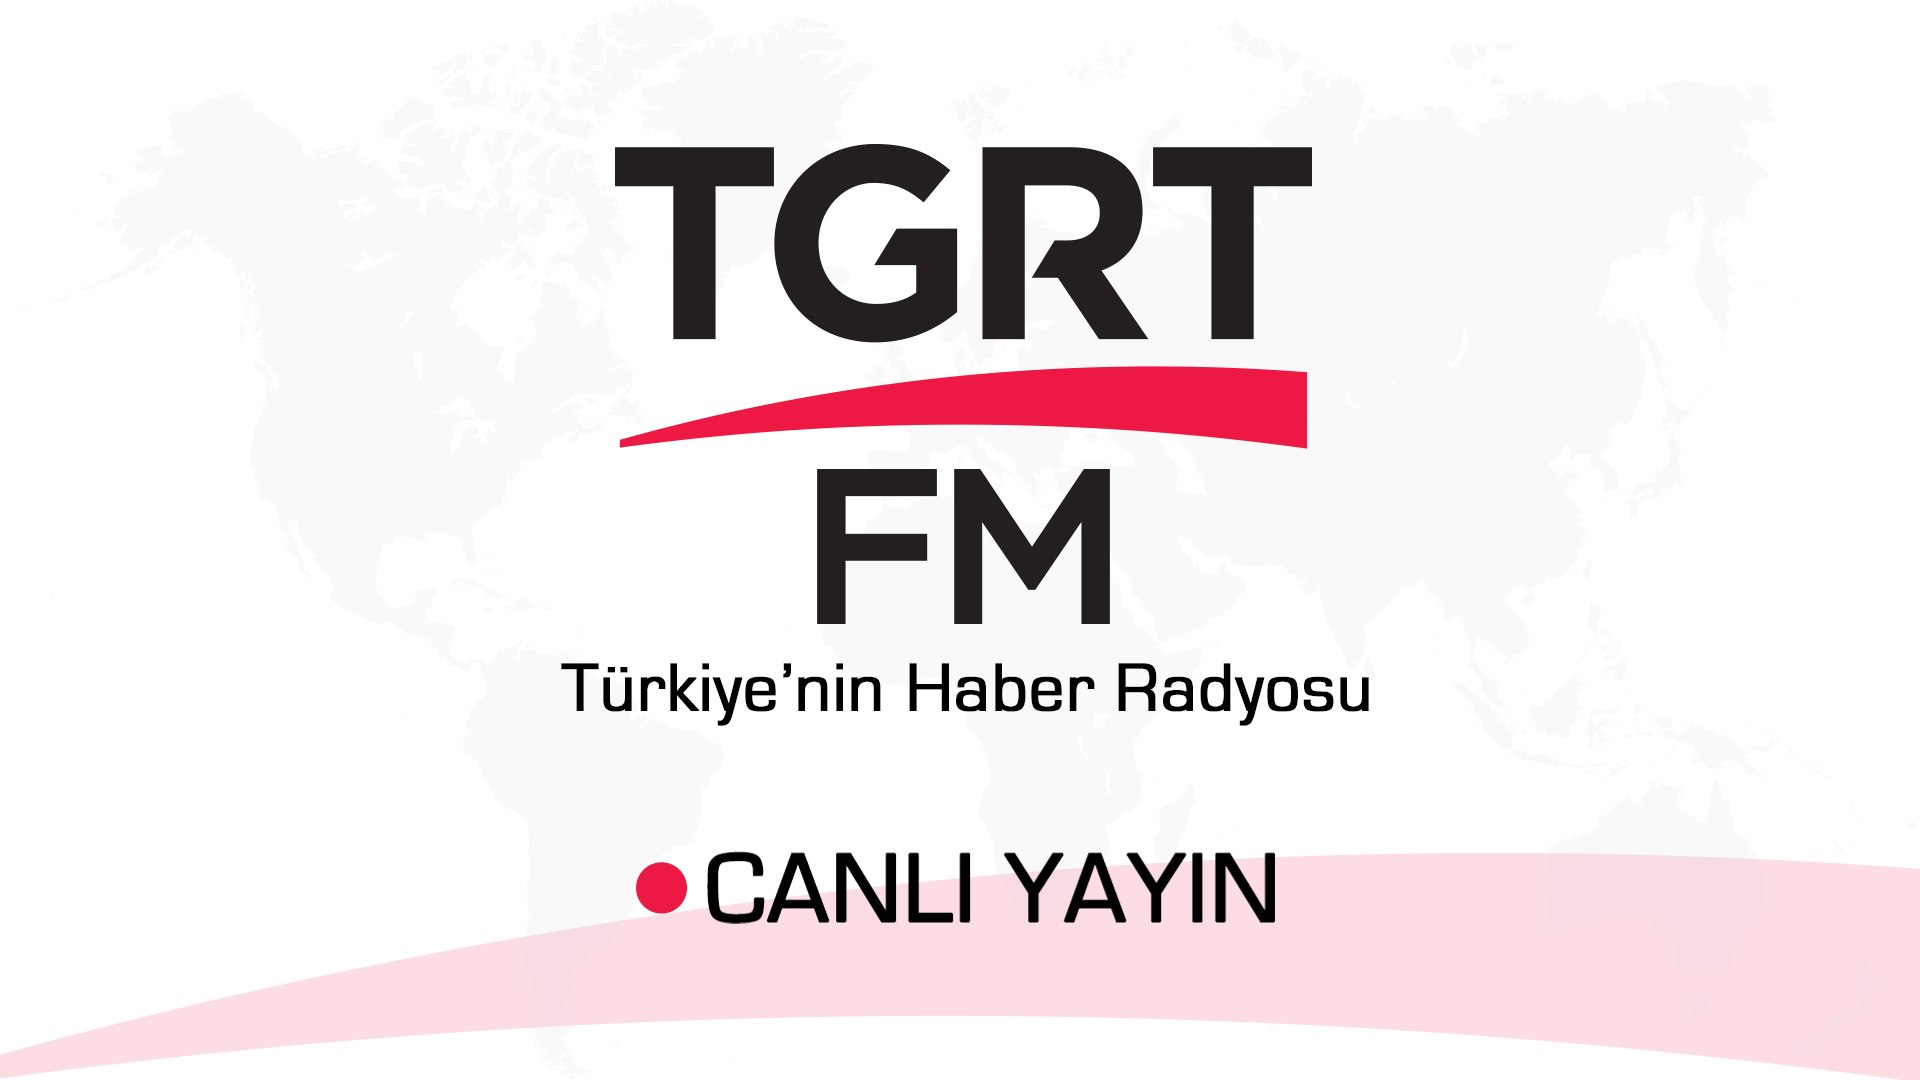 Tgrt Fm - Canlı Yayın - Live Broadcast - Dailymotion Video